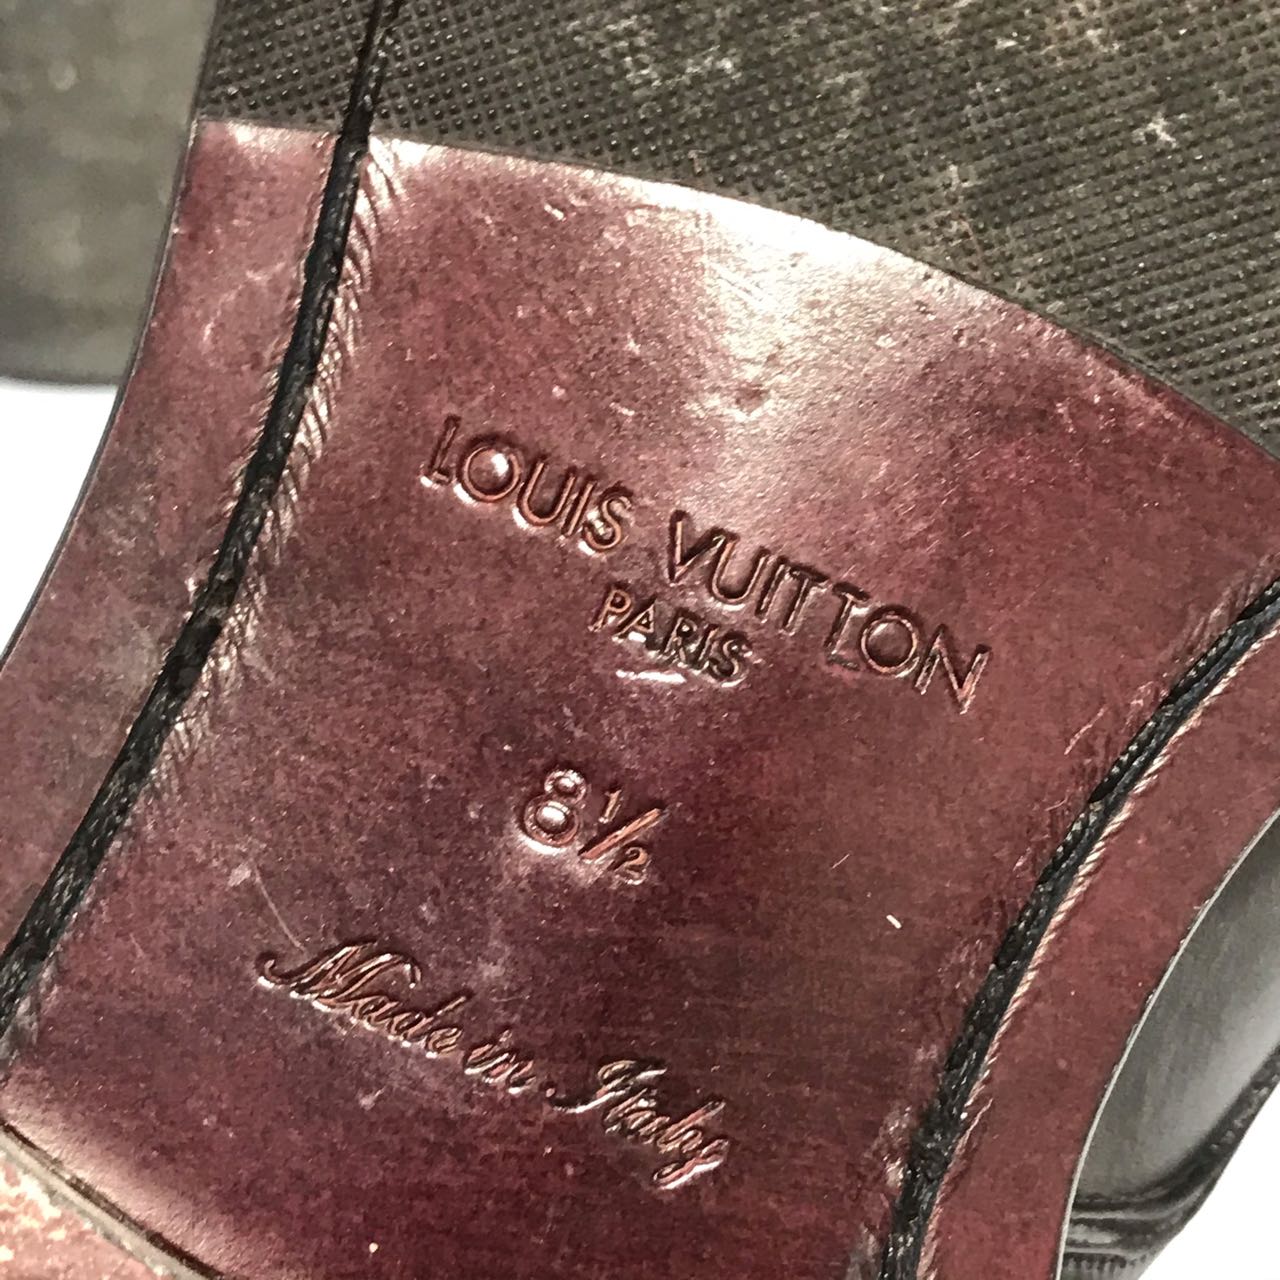 Chaussures Louis Vuitton Homme T.43,5